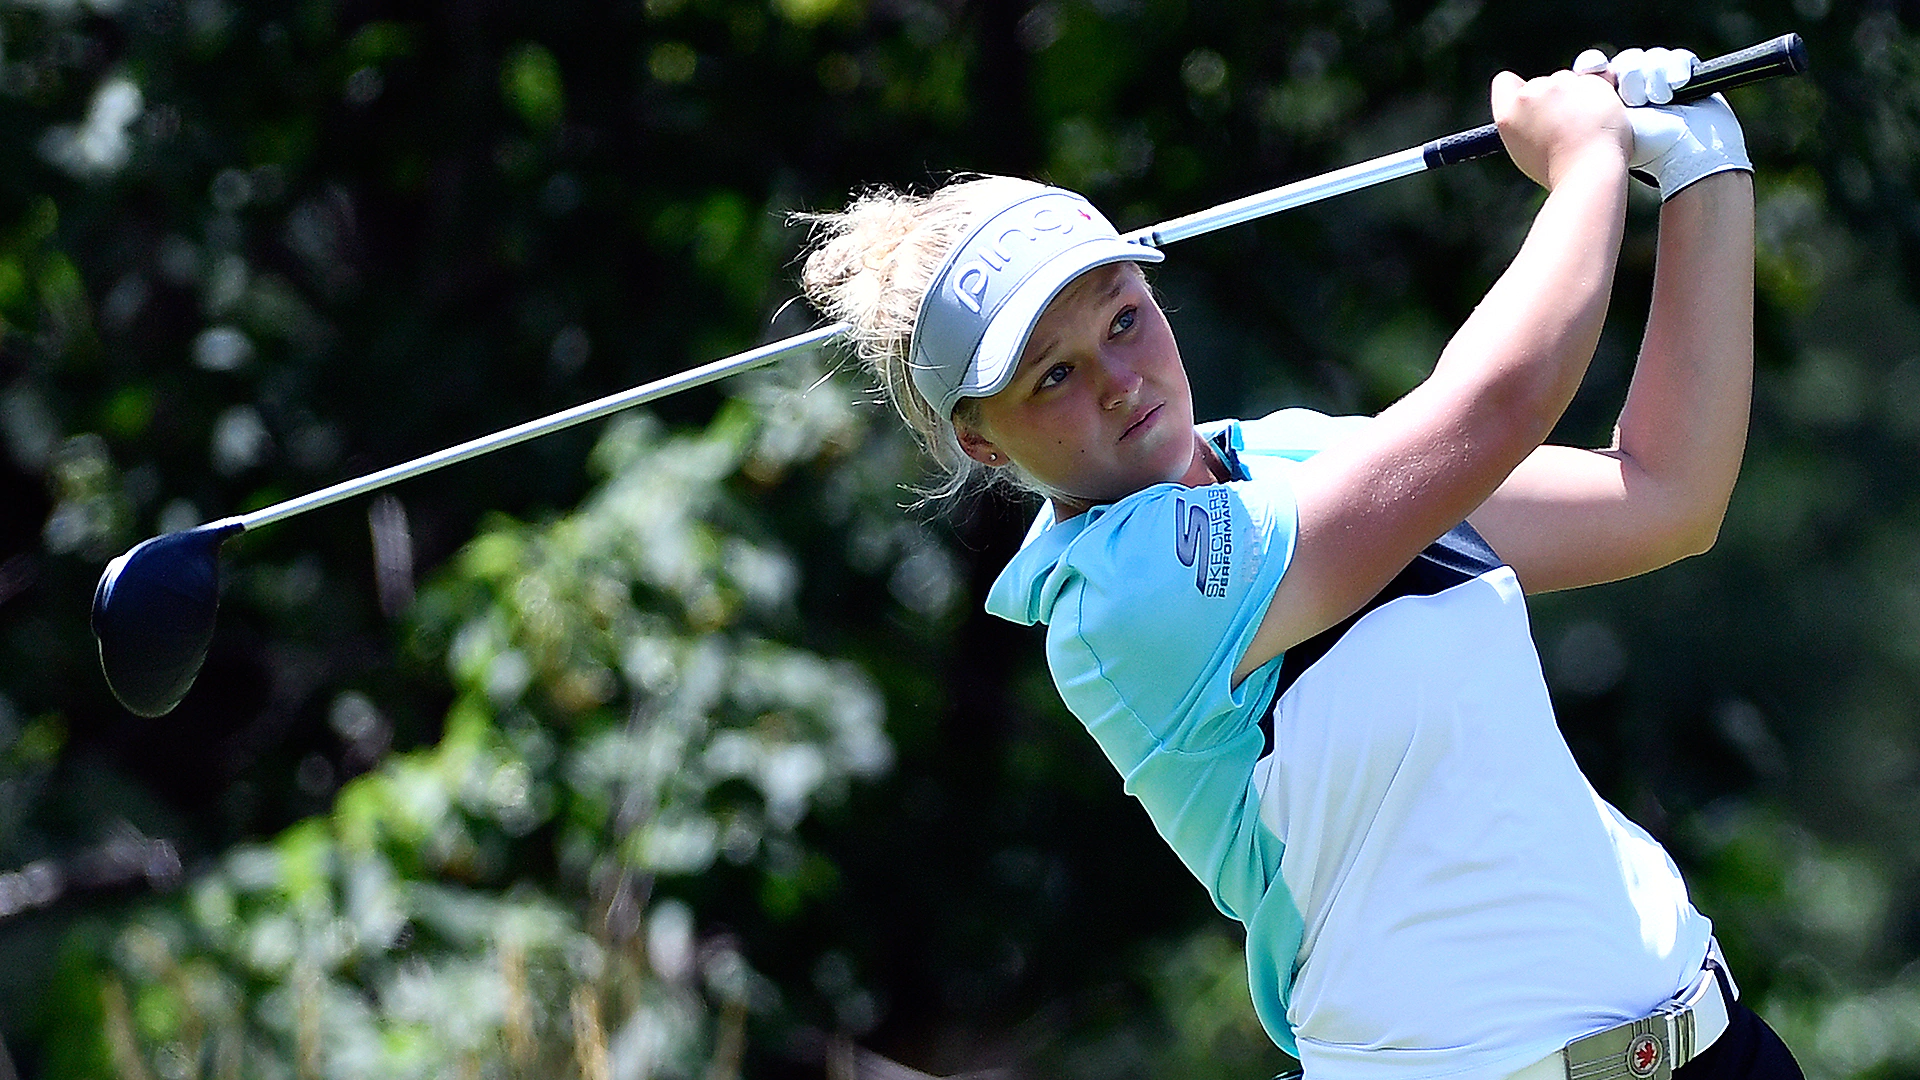 Henderson's Women's PGA title defense in reach